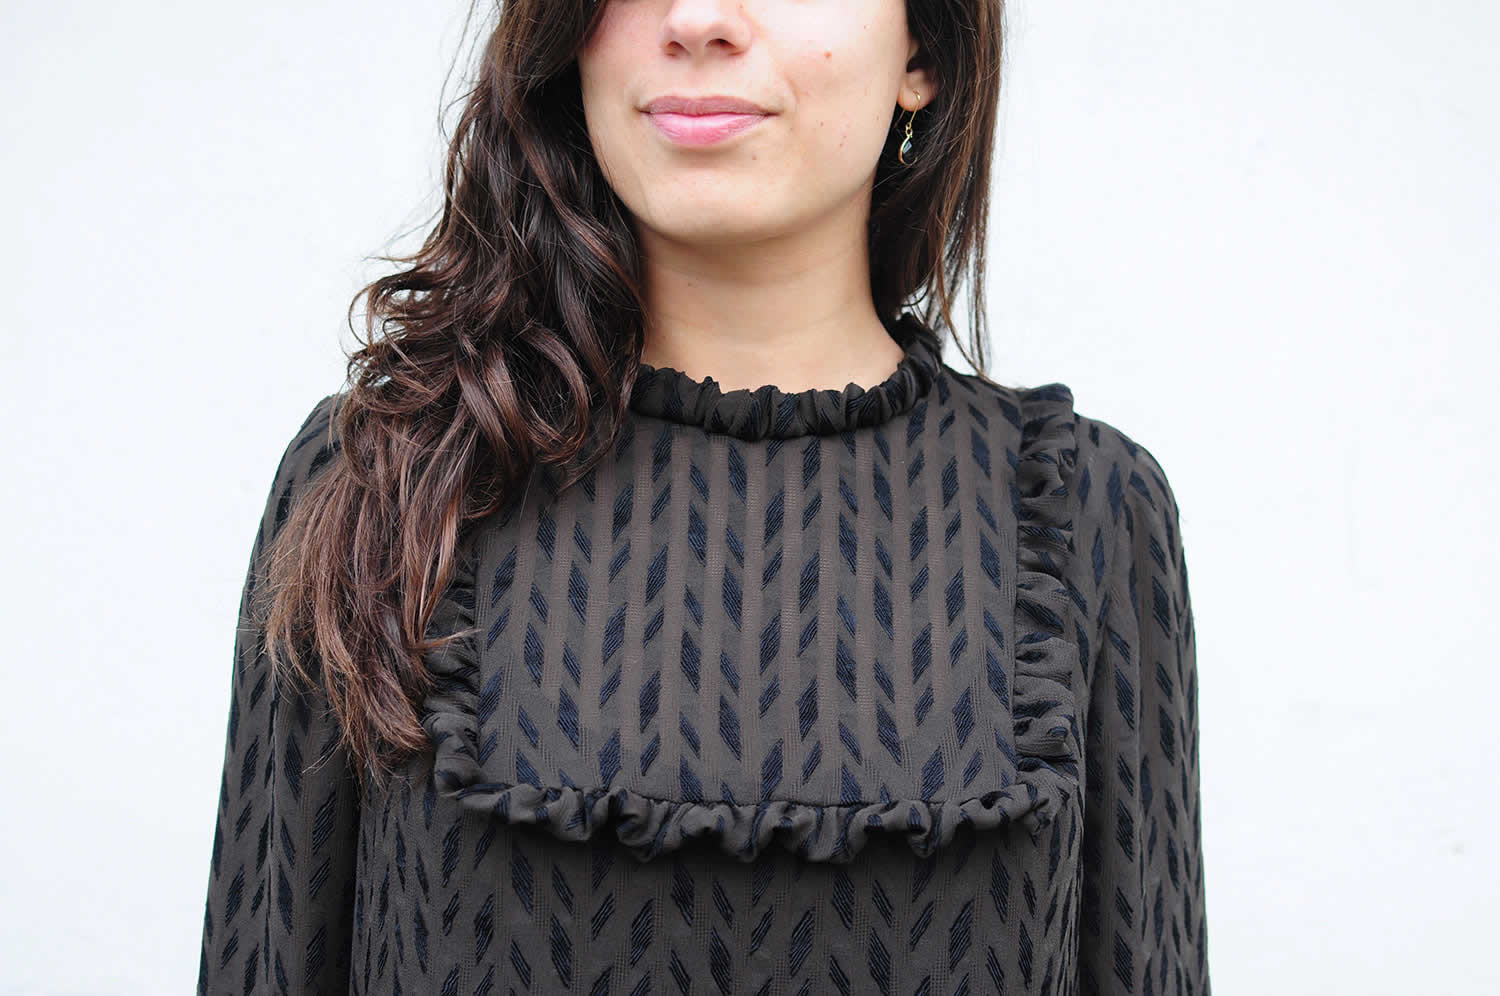 Ladulsatina - Sewing blog - Blog di cucito - Jolanda blusa by Atelier Vicolo n 6 in silk viscose blend - Front neckline details